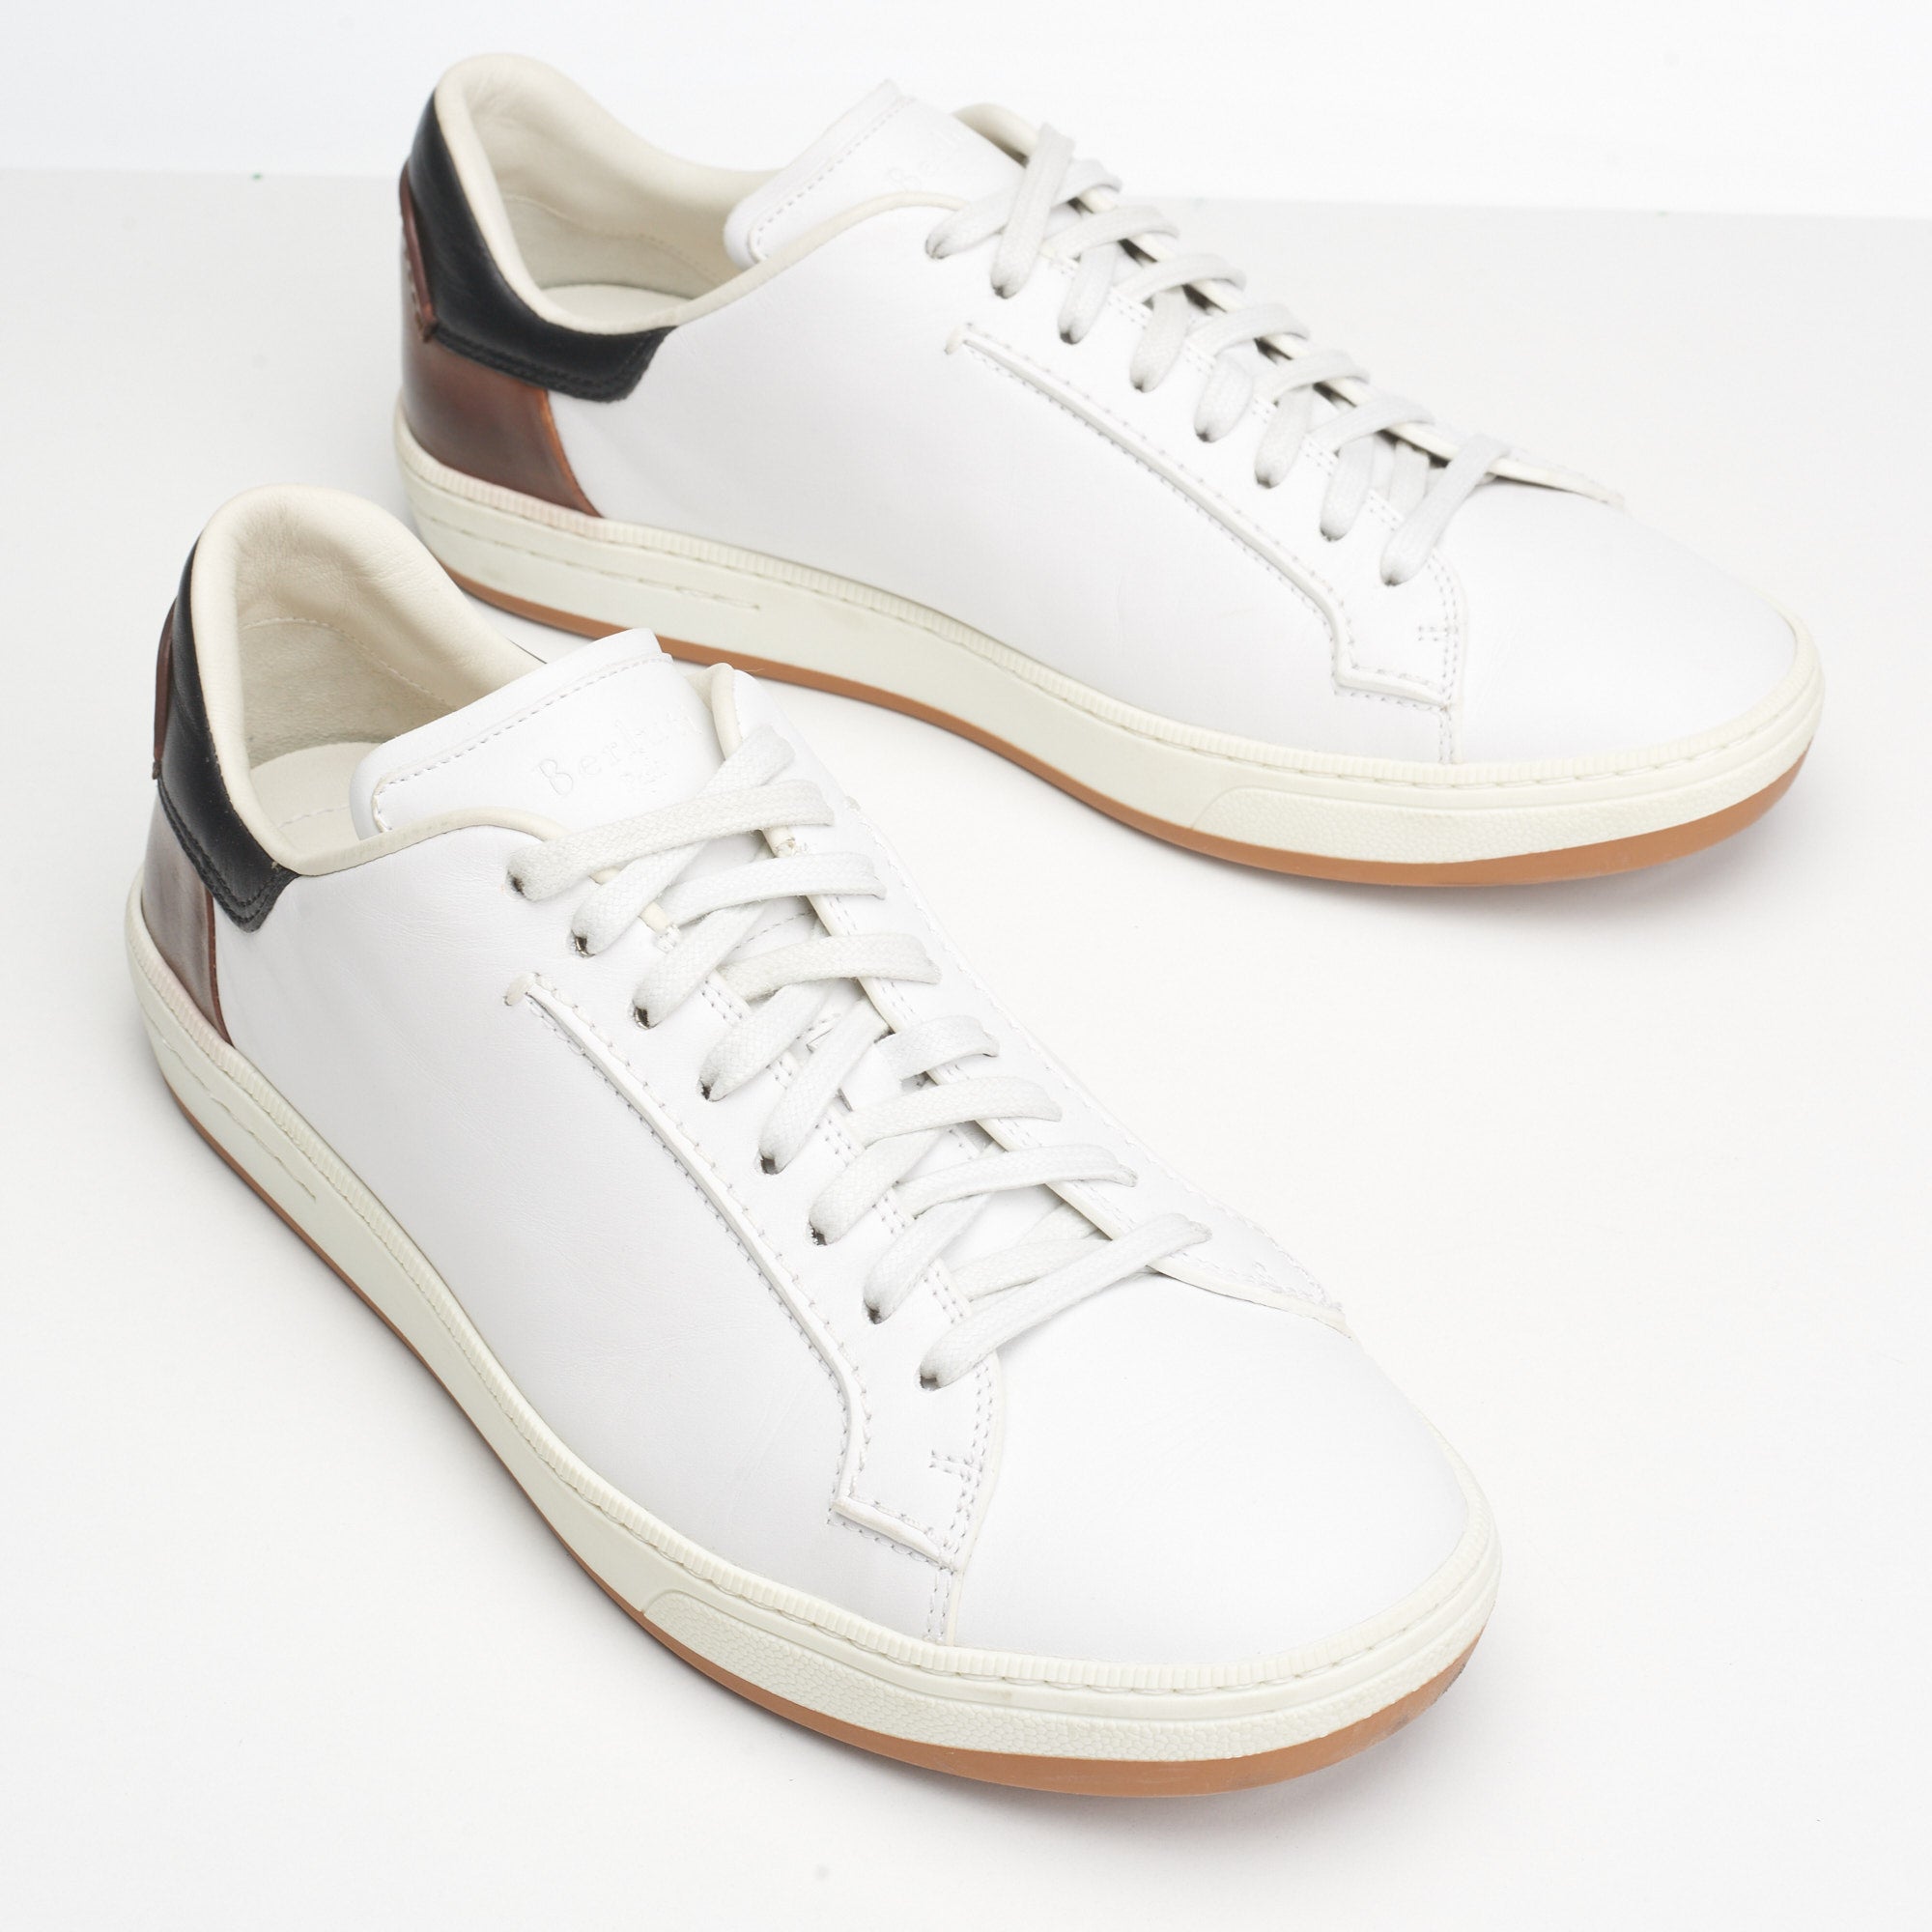 BERLUTI Paris White Leather 8 Eyelet Lace-up Sneaker Shoes Size 6.5 US 7.5 BERLUTI